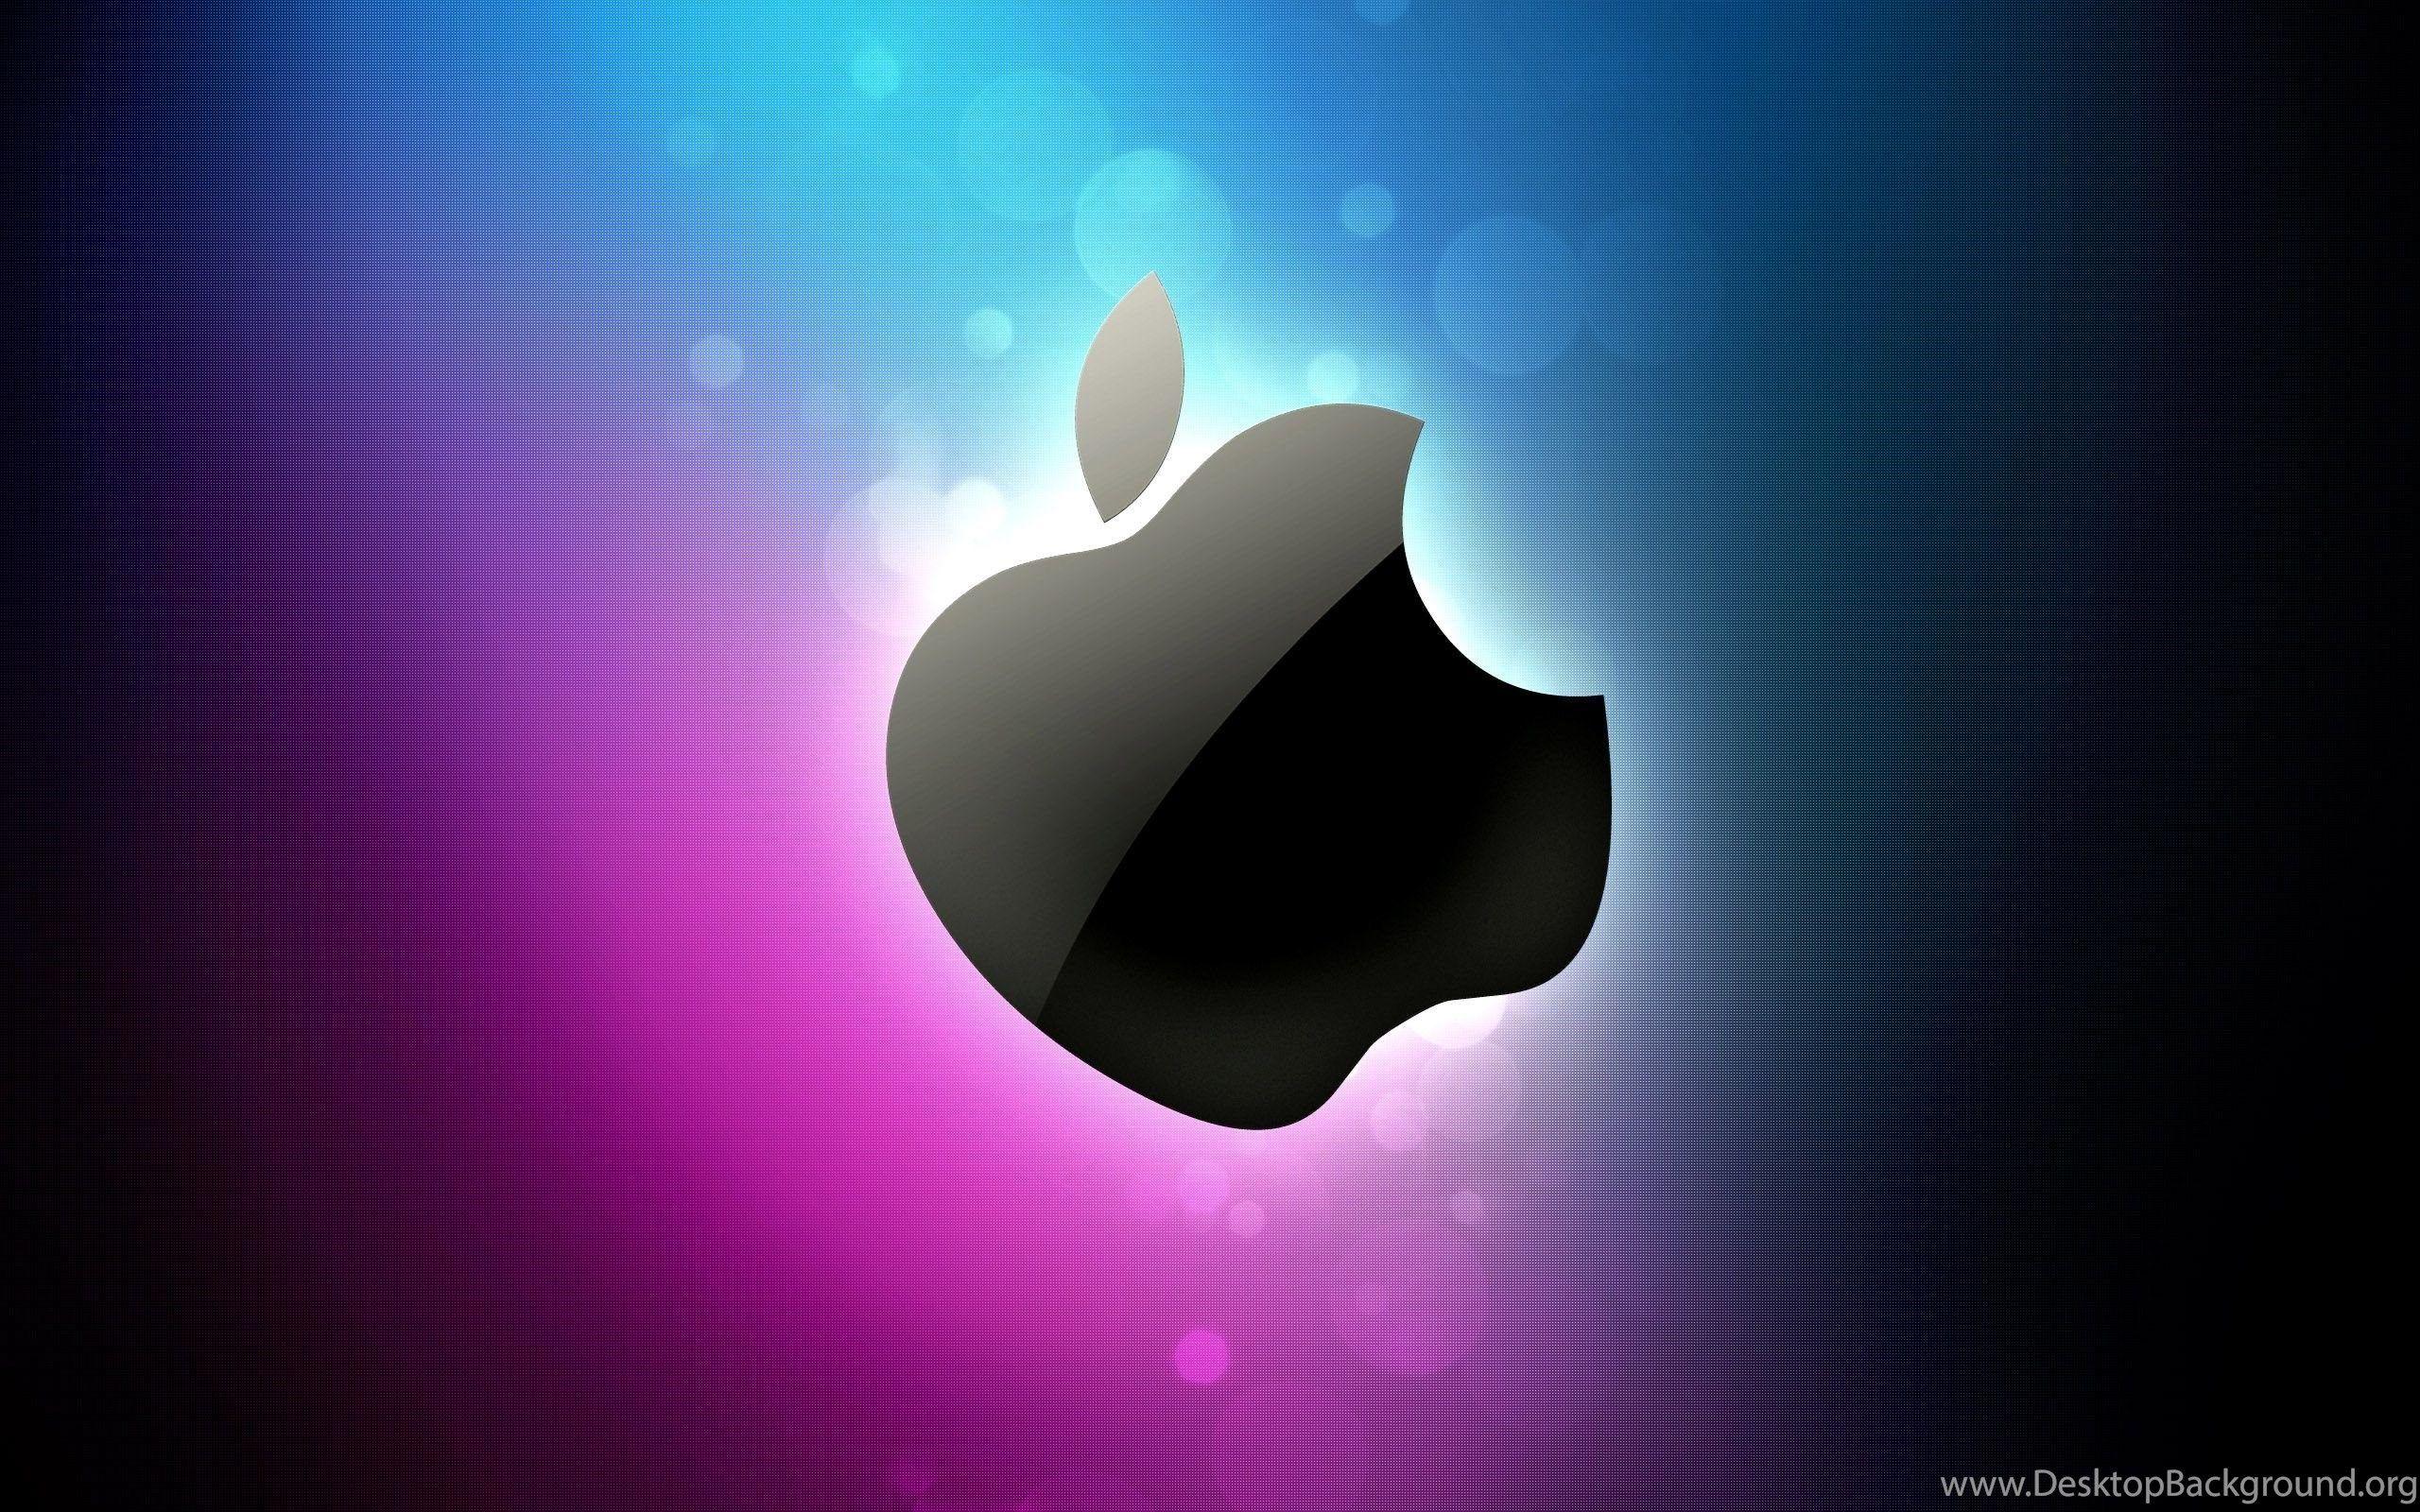 Official Apple Logo - Official Apple Logo High Resolution Wallpaper. Desktop Background